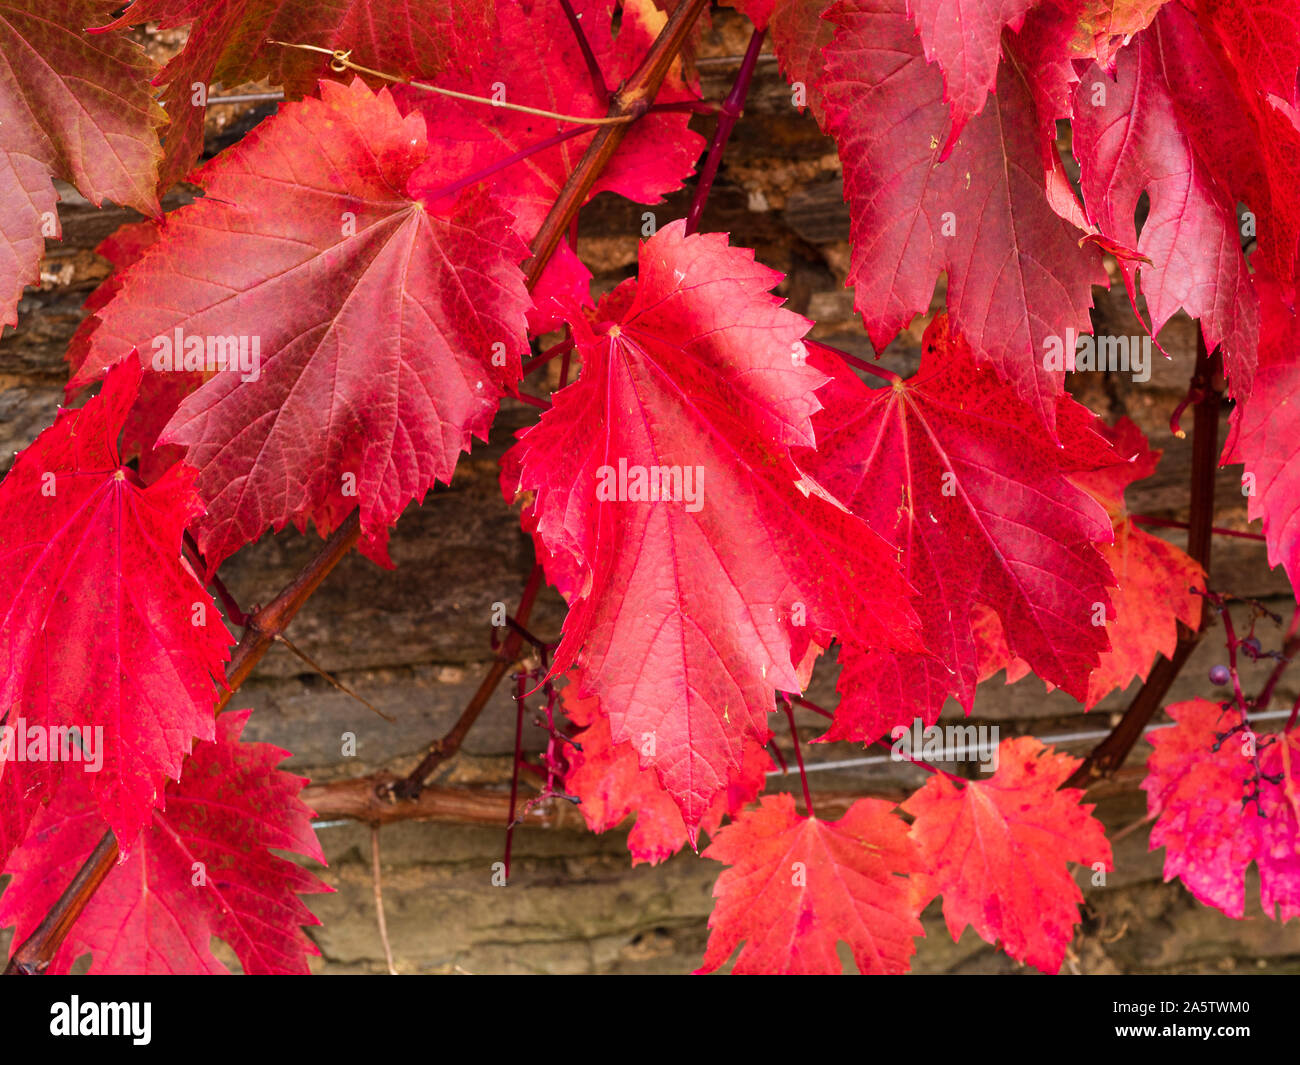 Rot bronze Herbst Laub der ornamentalen Rebsorten der Art Vitis vinifera gehören petchley Rot' Stockfoto